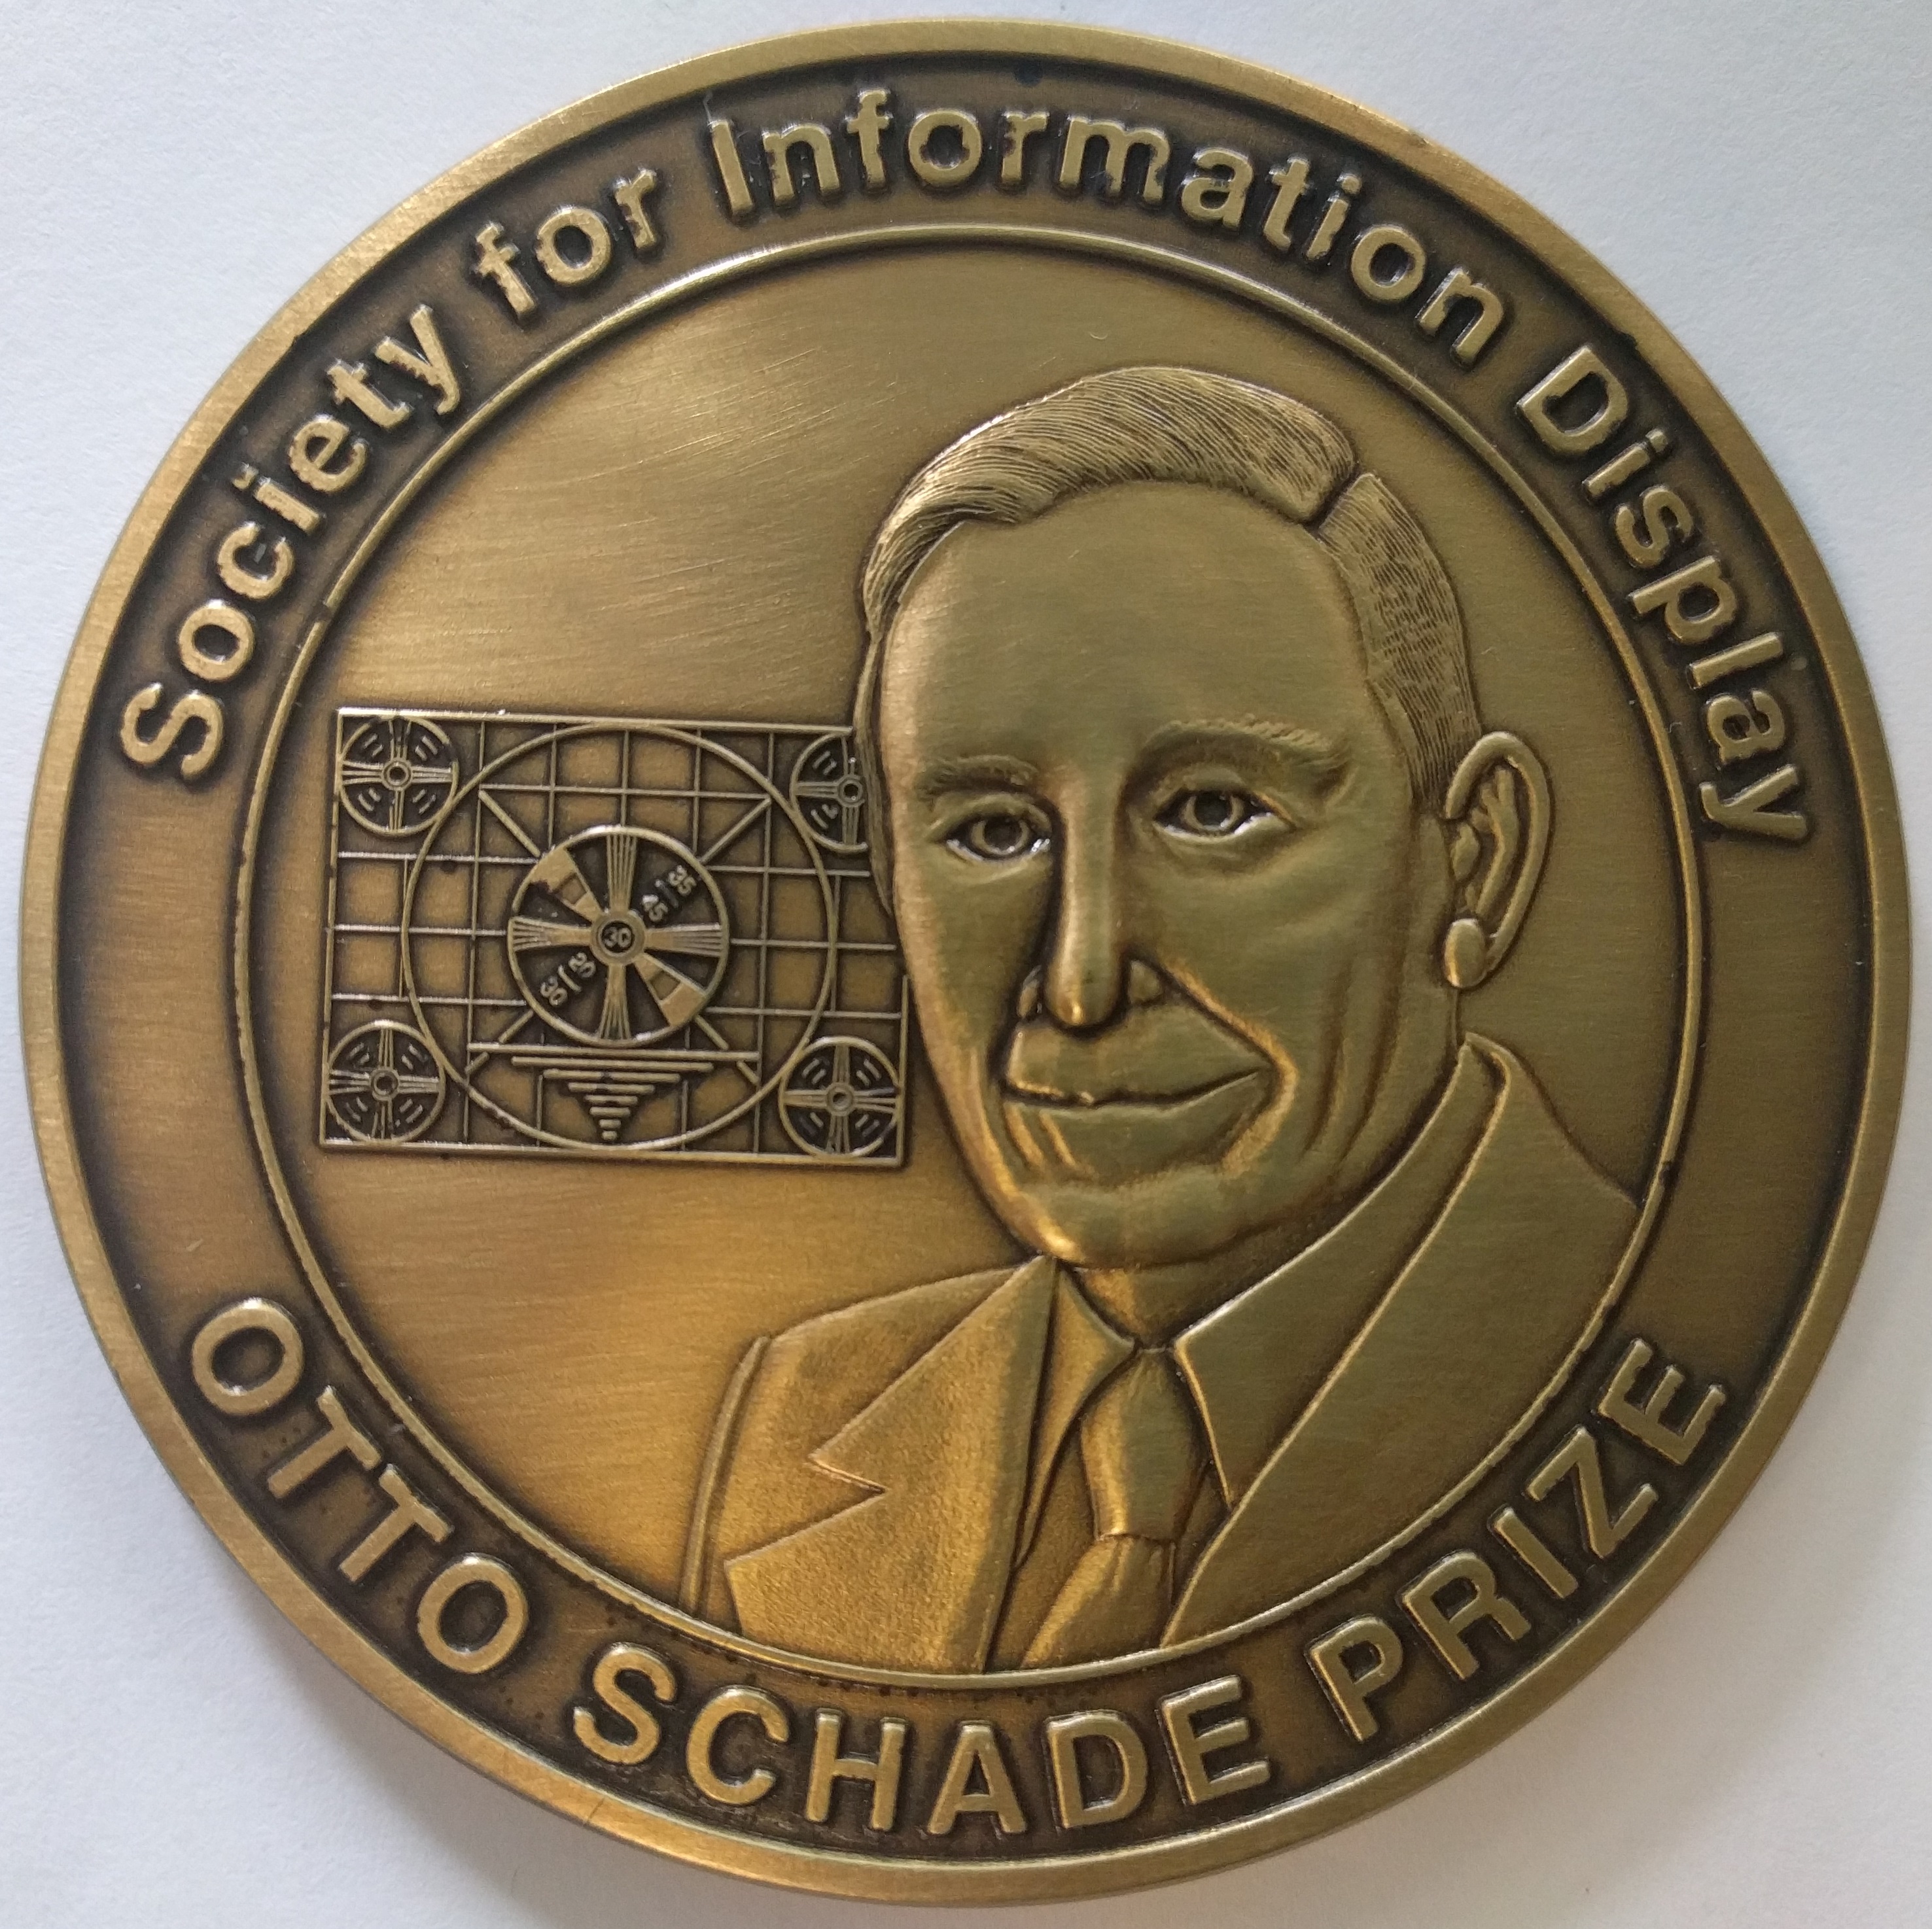 Photo of the Otto Schade Prize